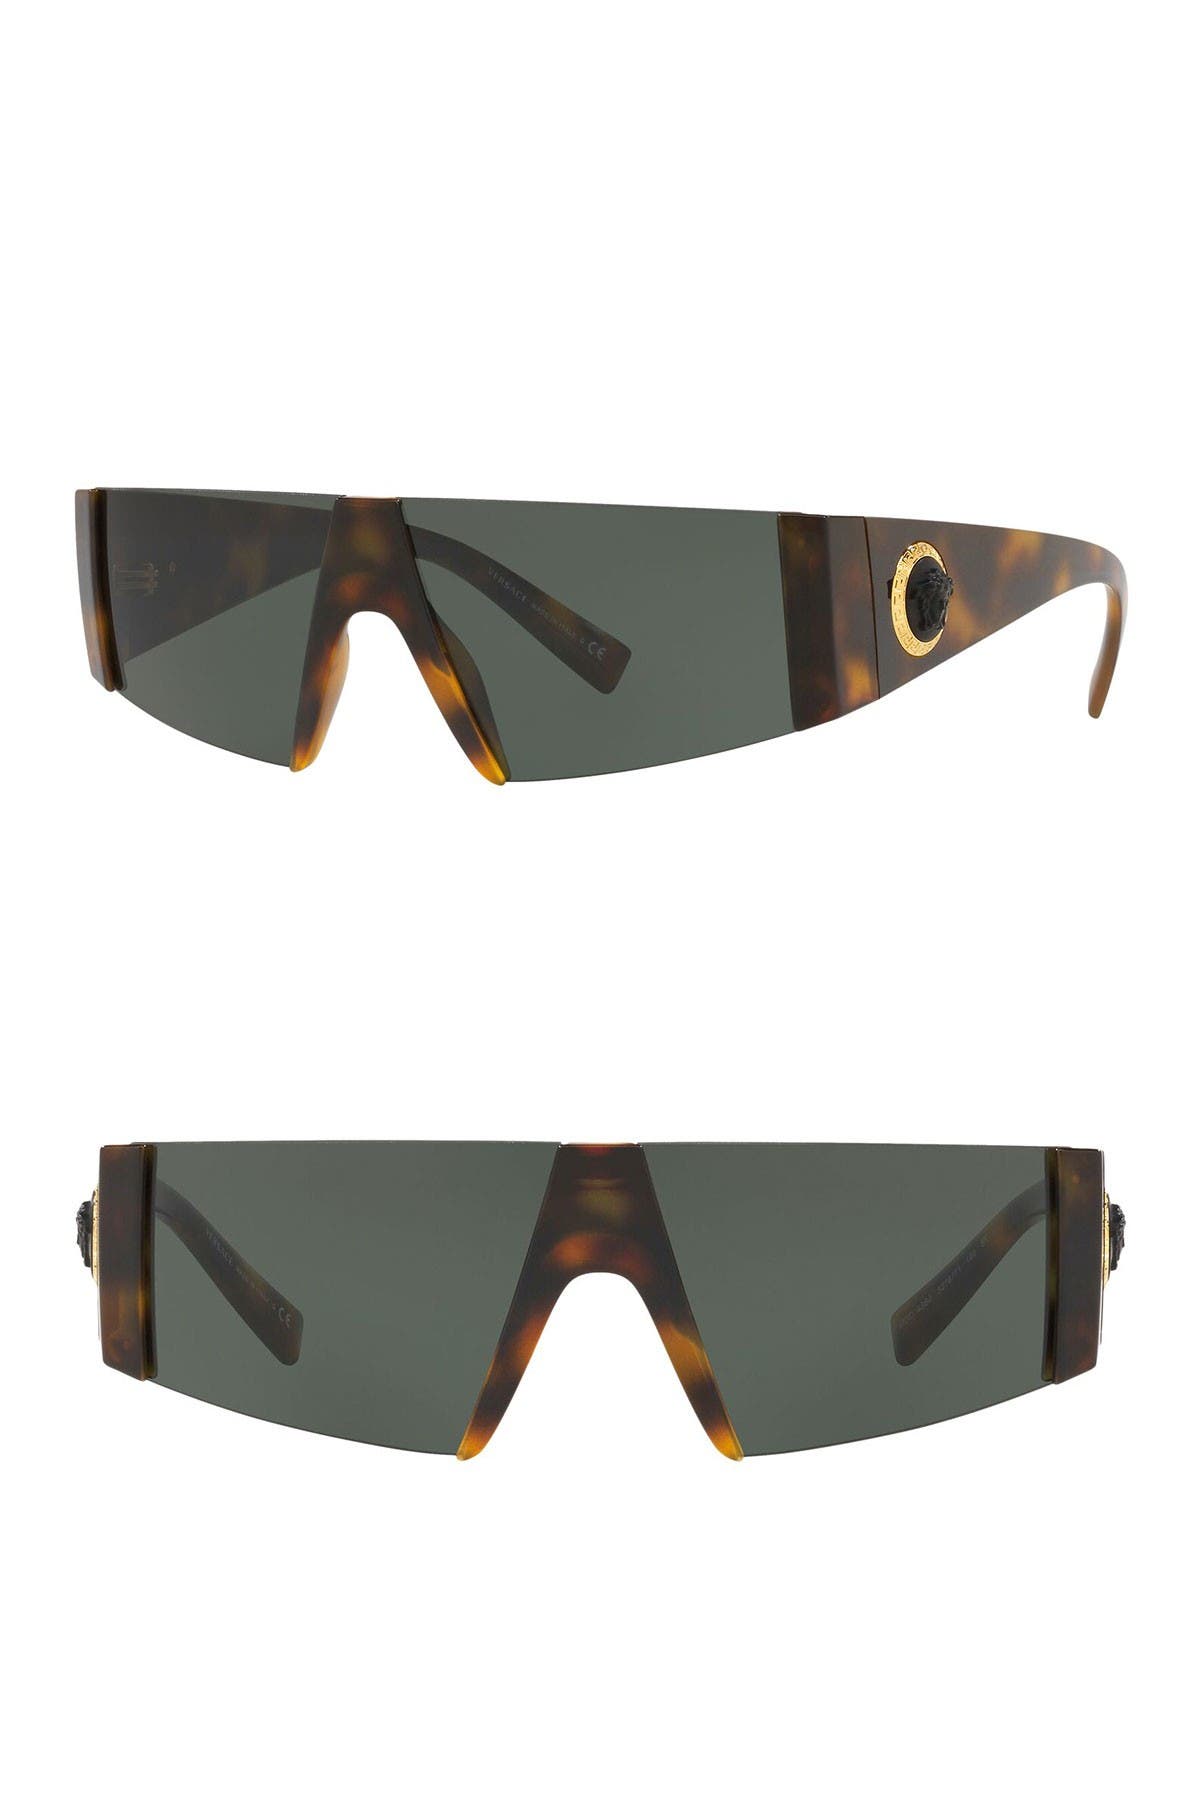 versace shield sunglasses